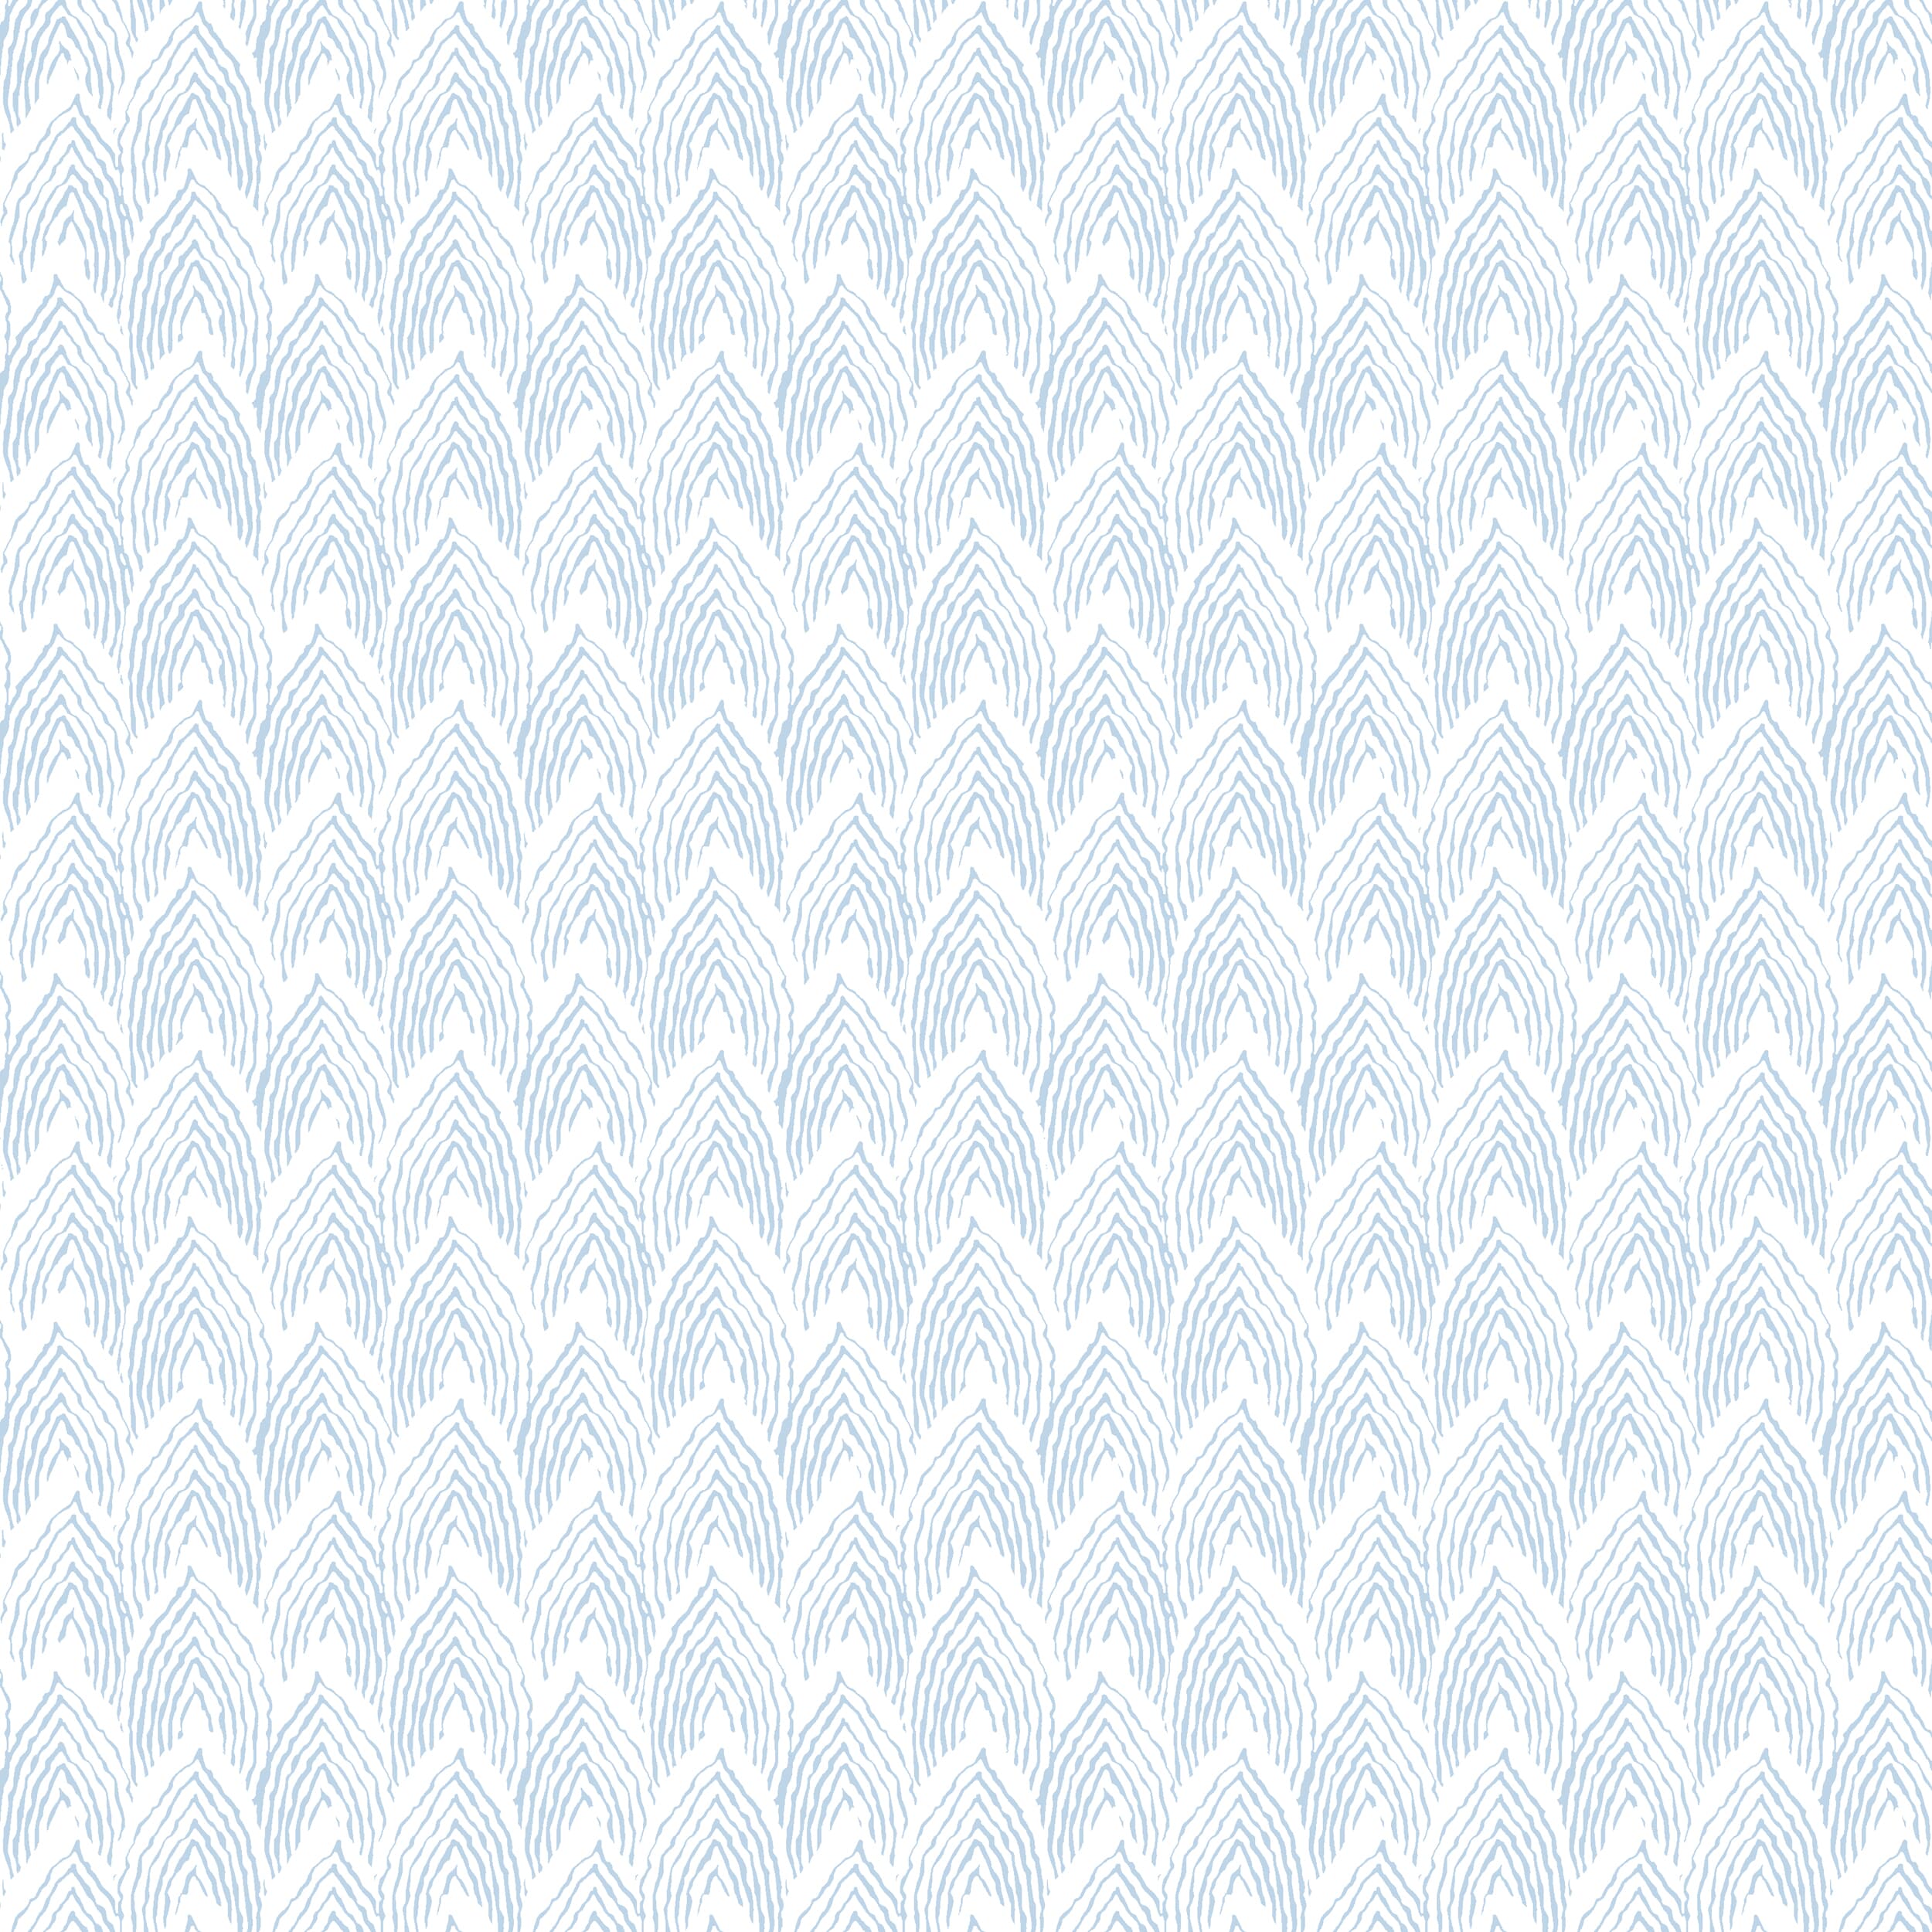 W01vl-7 Piedmont Breeze Wallpaper by Stout Fabric